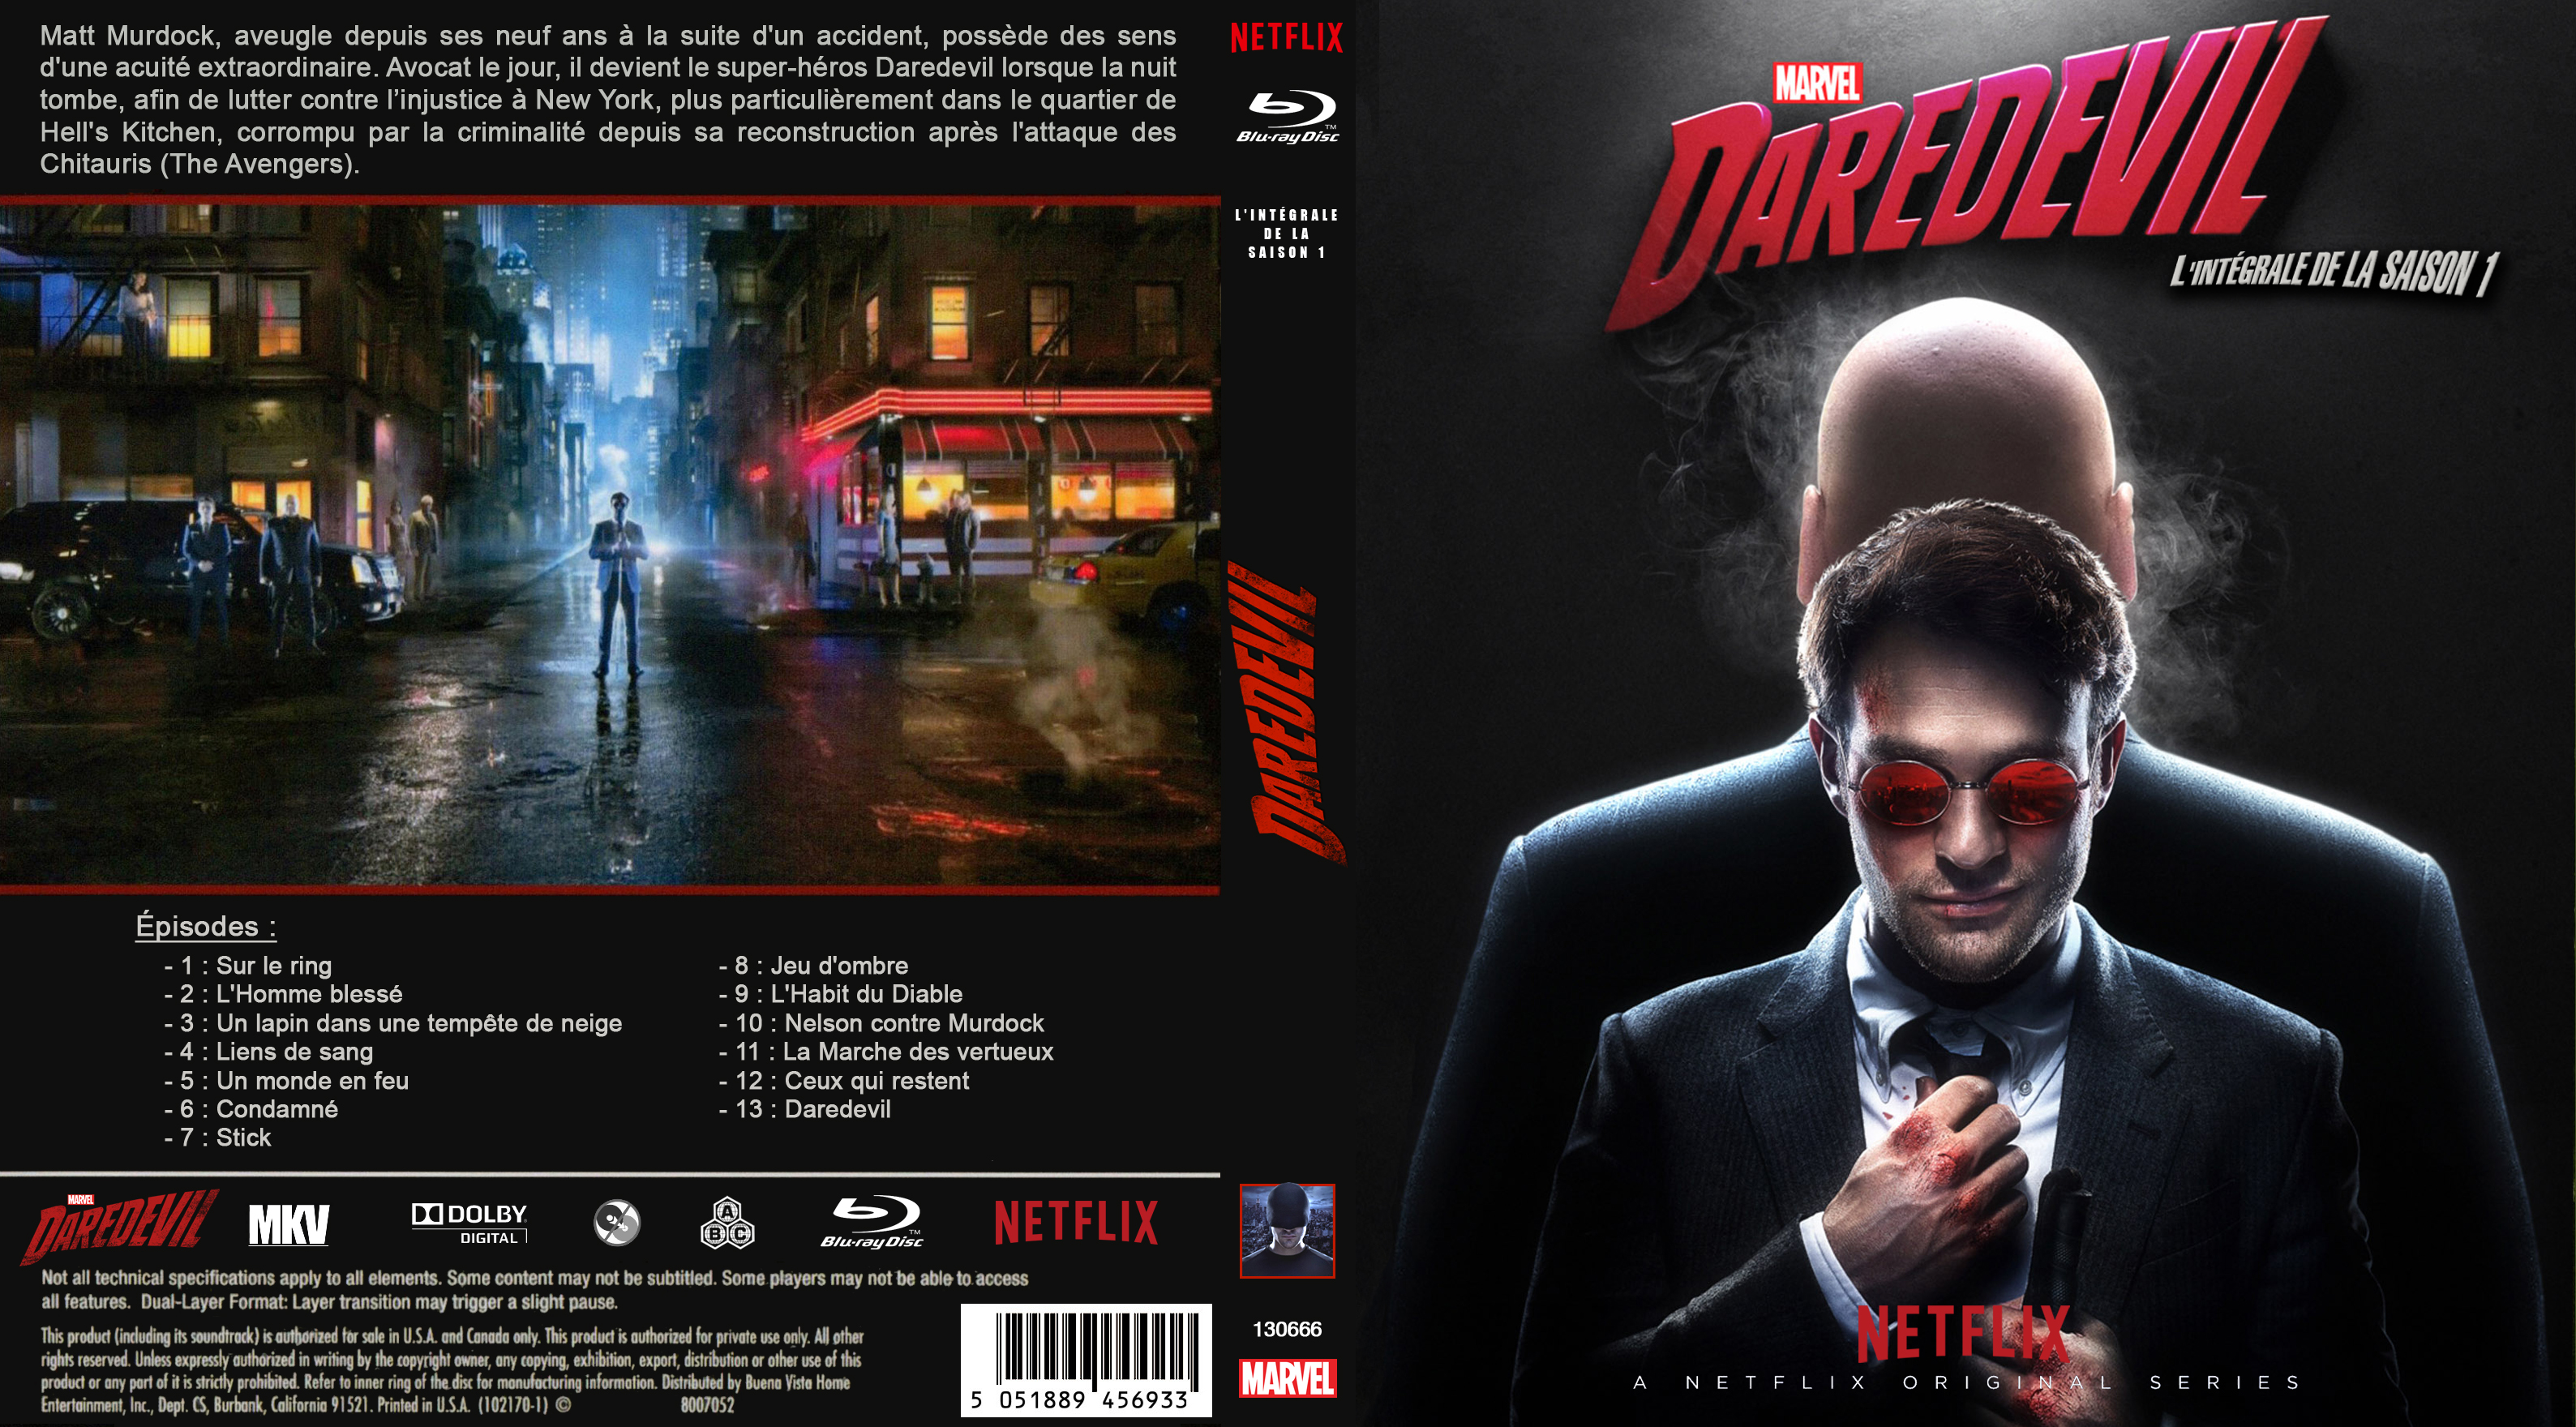 Jaquette DVD Daredevil Saison 1 custom (BLU-RAY)